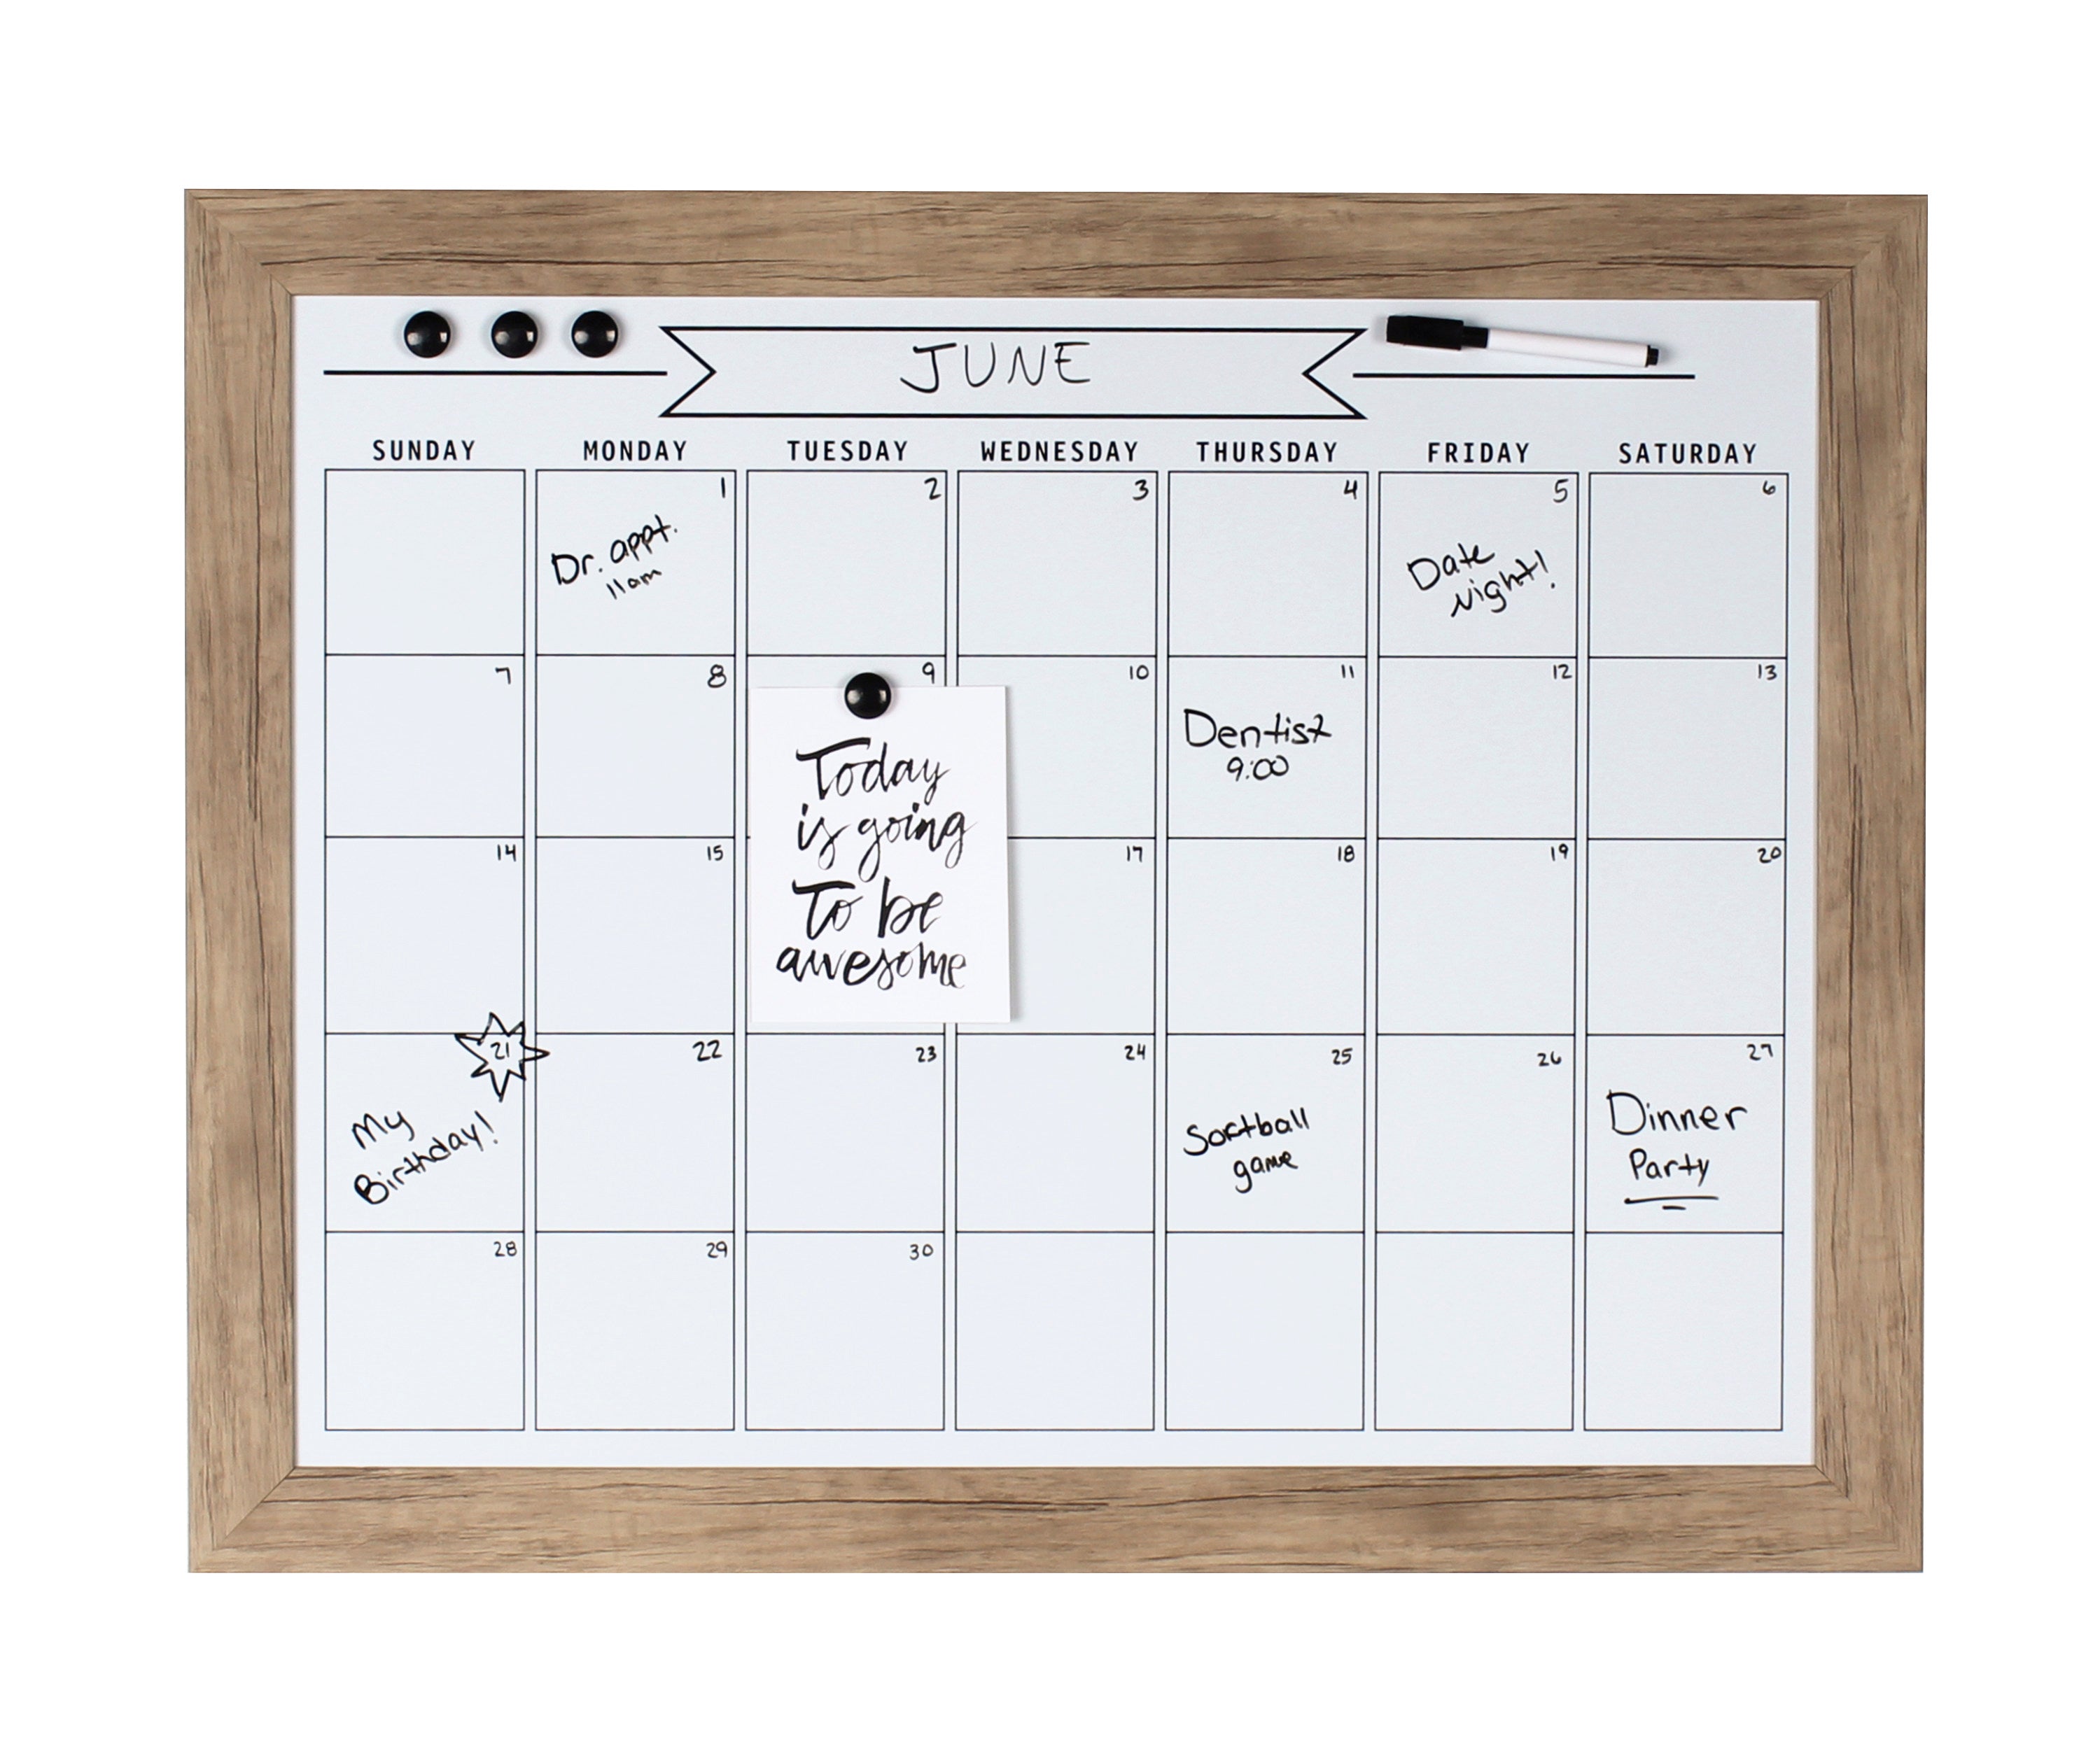 Beatrice Framed Magnetic Dry Erase Monthly Calendar